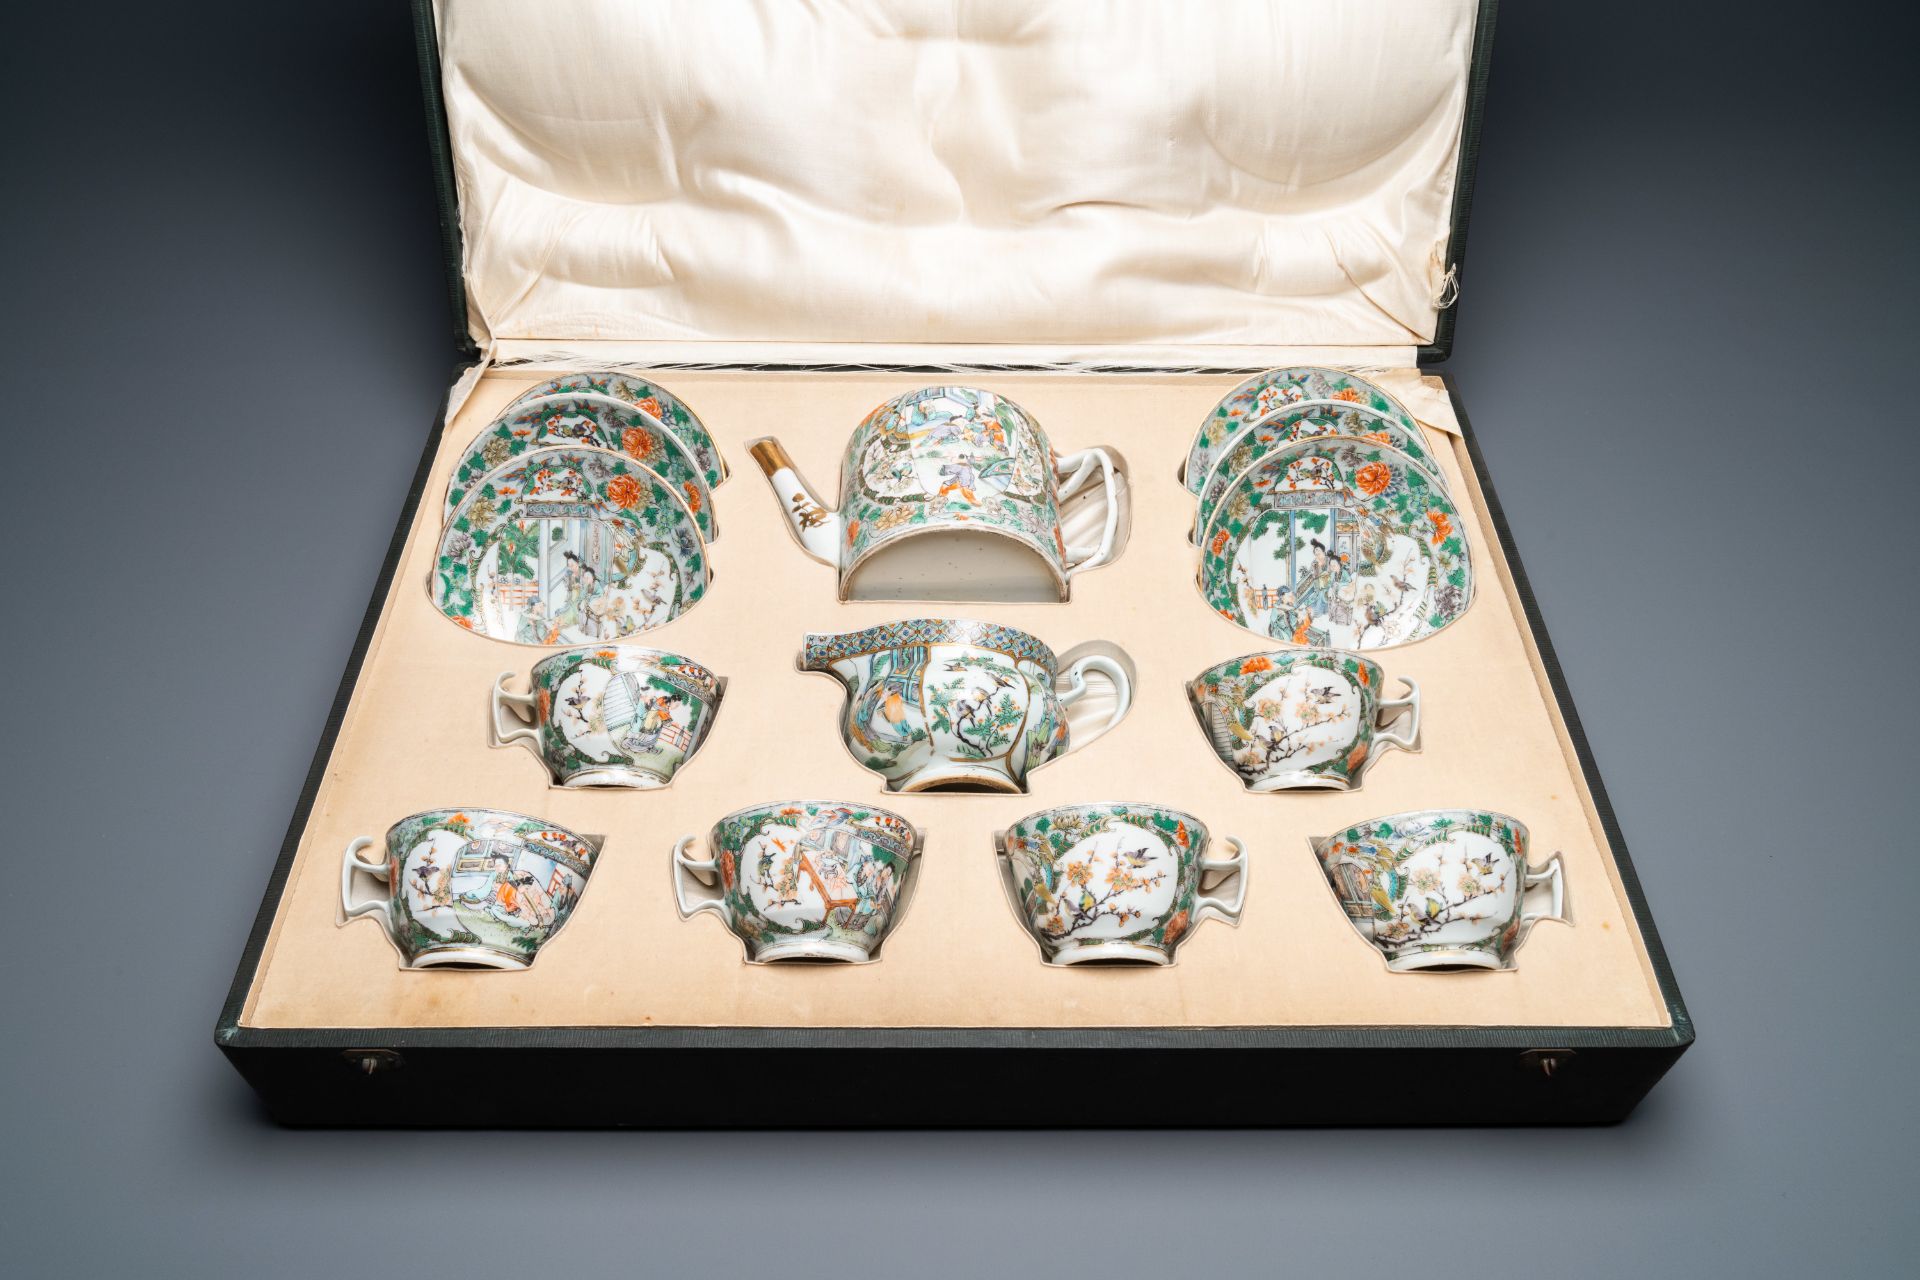 A Chinese Canton famille verte 14-piece tea service in presentation box, 19th C.